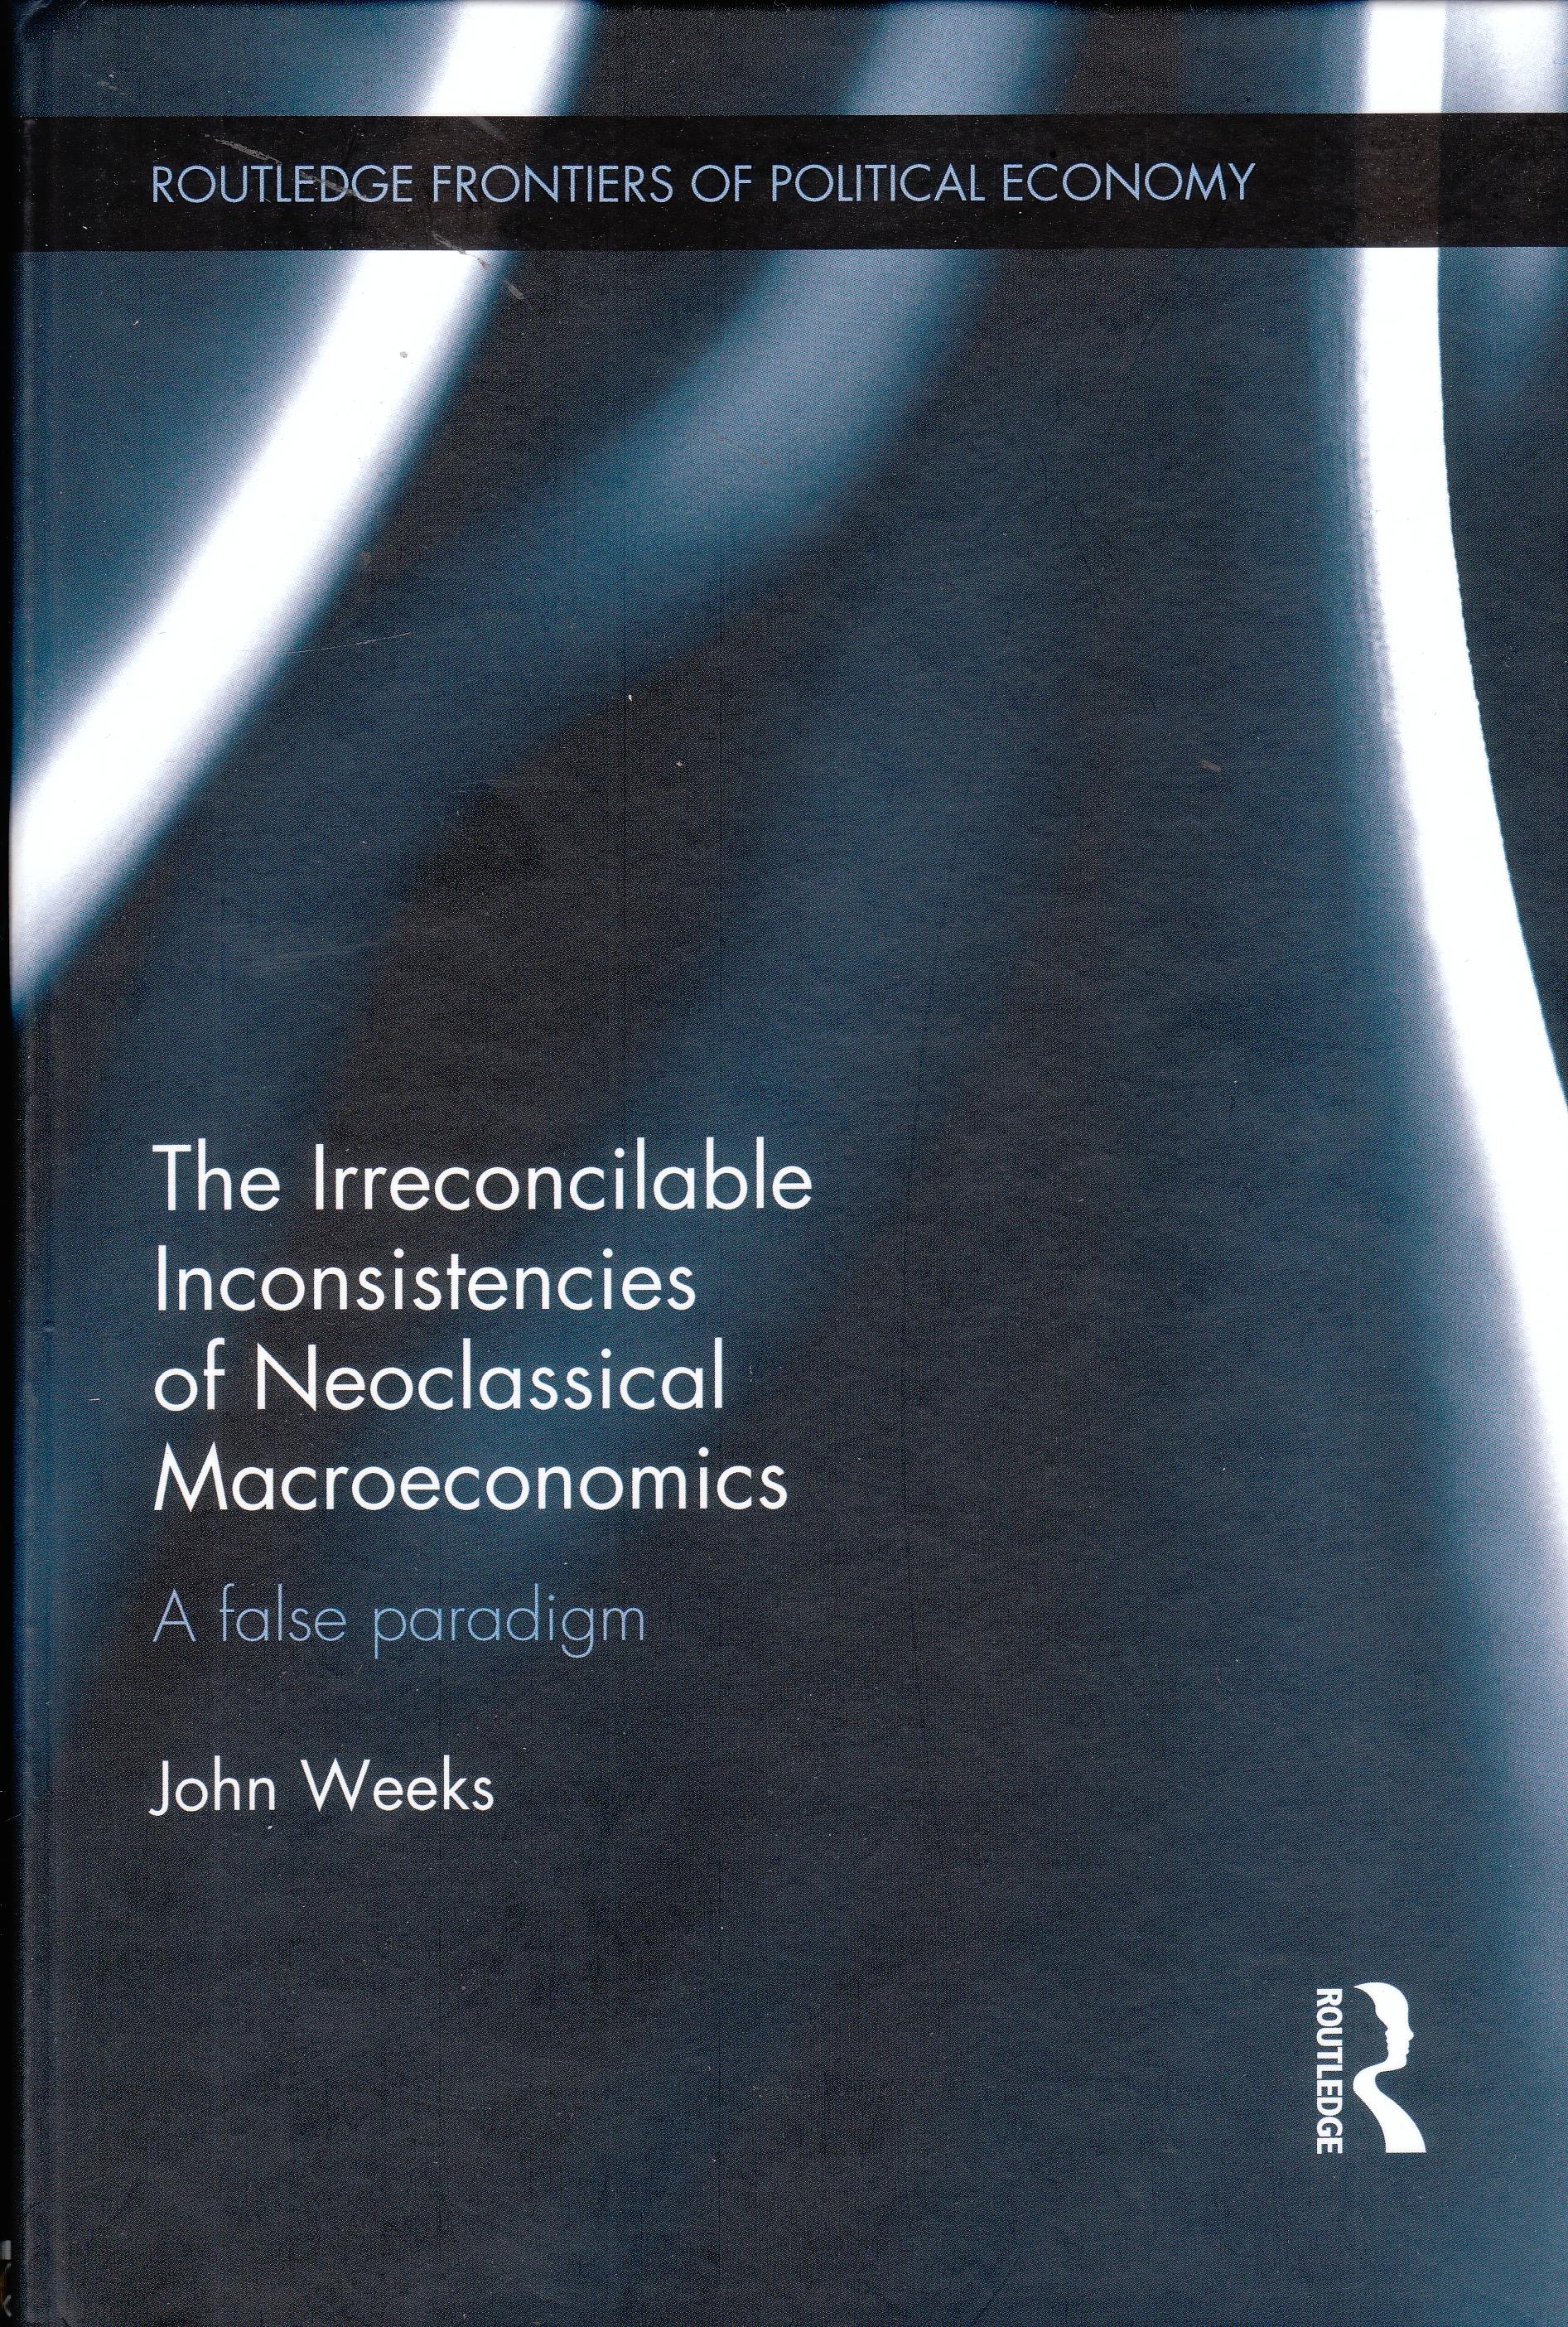 The Irreconcilable Inconsistencies of Neoclassical Macroeconomics "A False Paradigm"